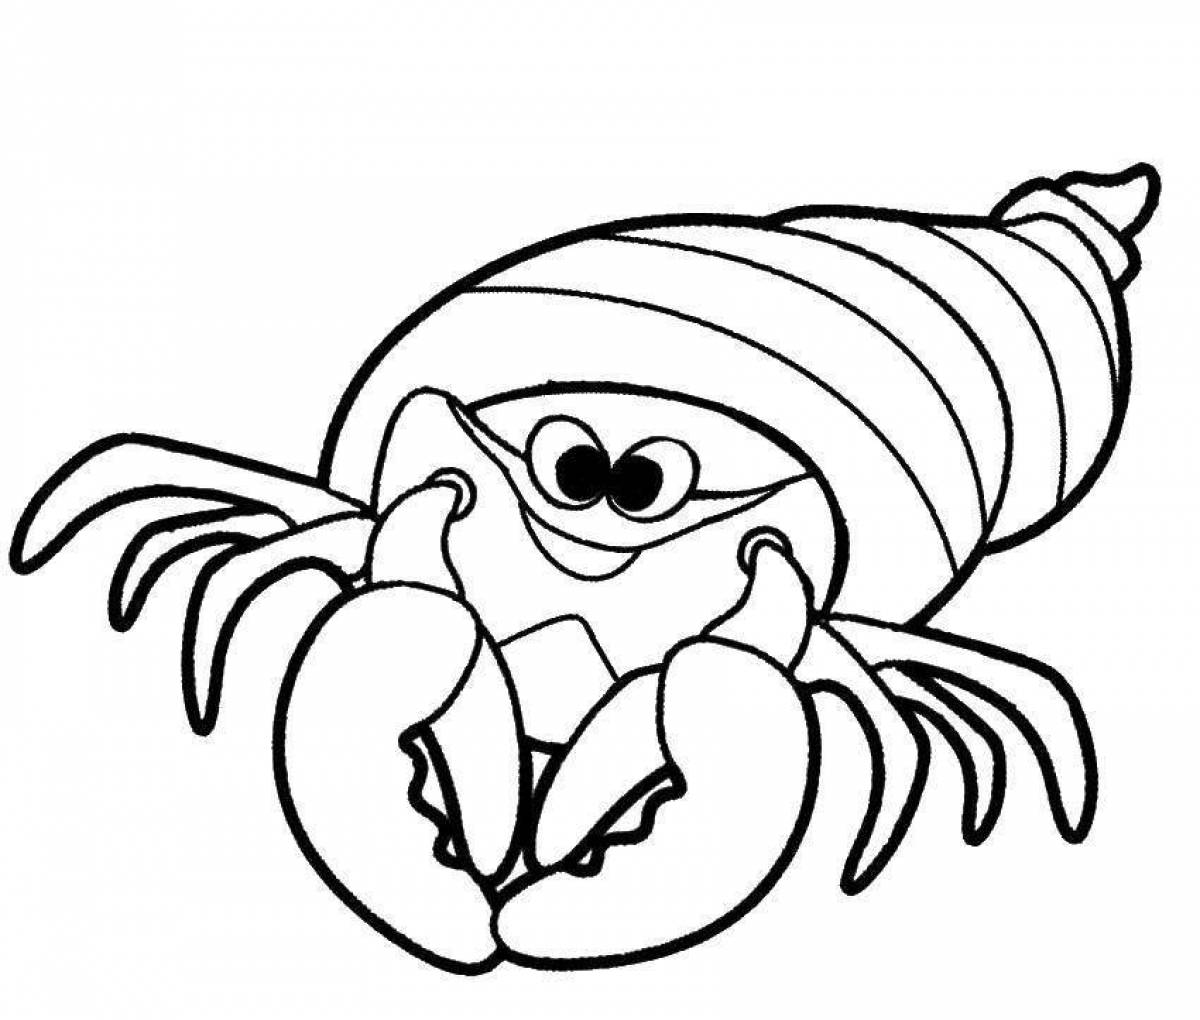 Adorable hermit crab coloring page